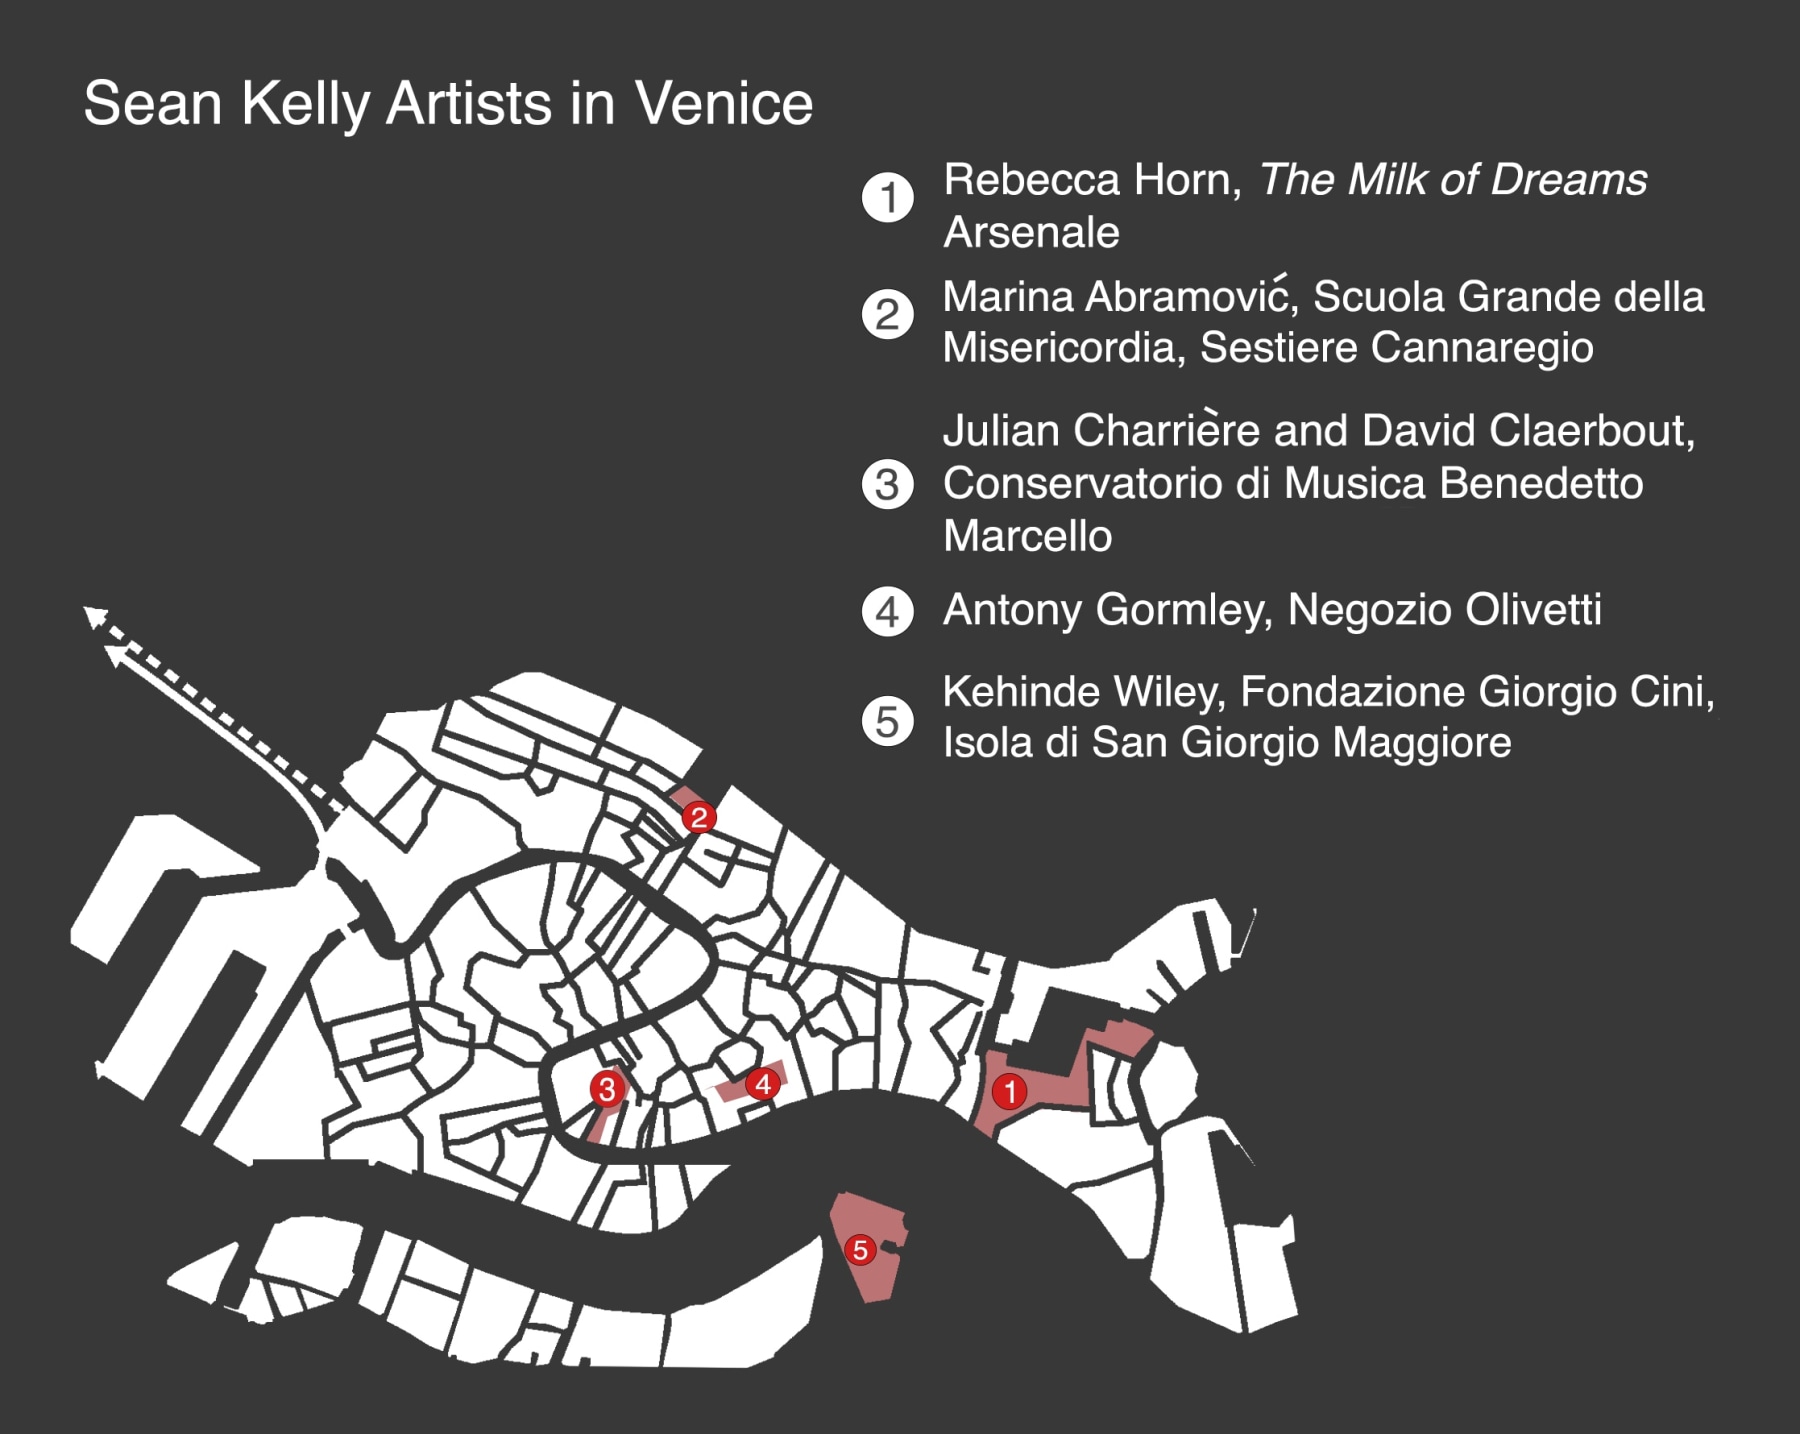 Sean Kelly Artists in Venice -  - Viewing Room - Sean Kelly Gallery - Online Exhibition